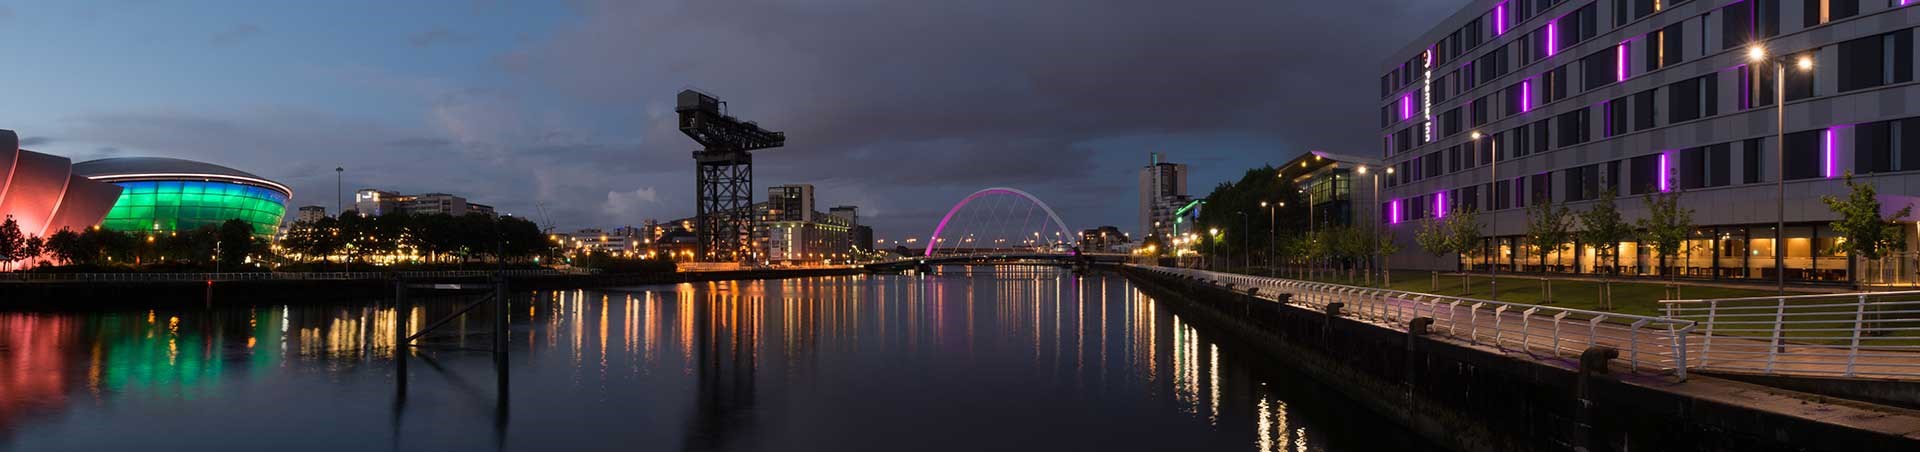 Clyde Arc, Glasgow